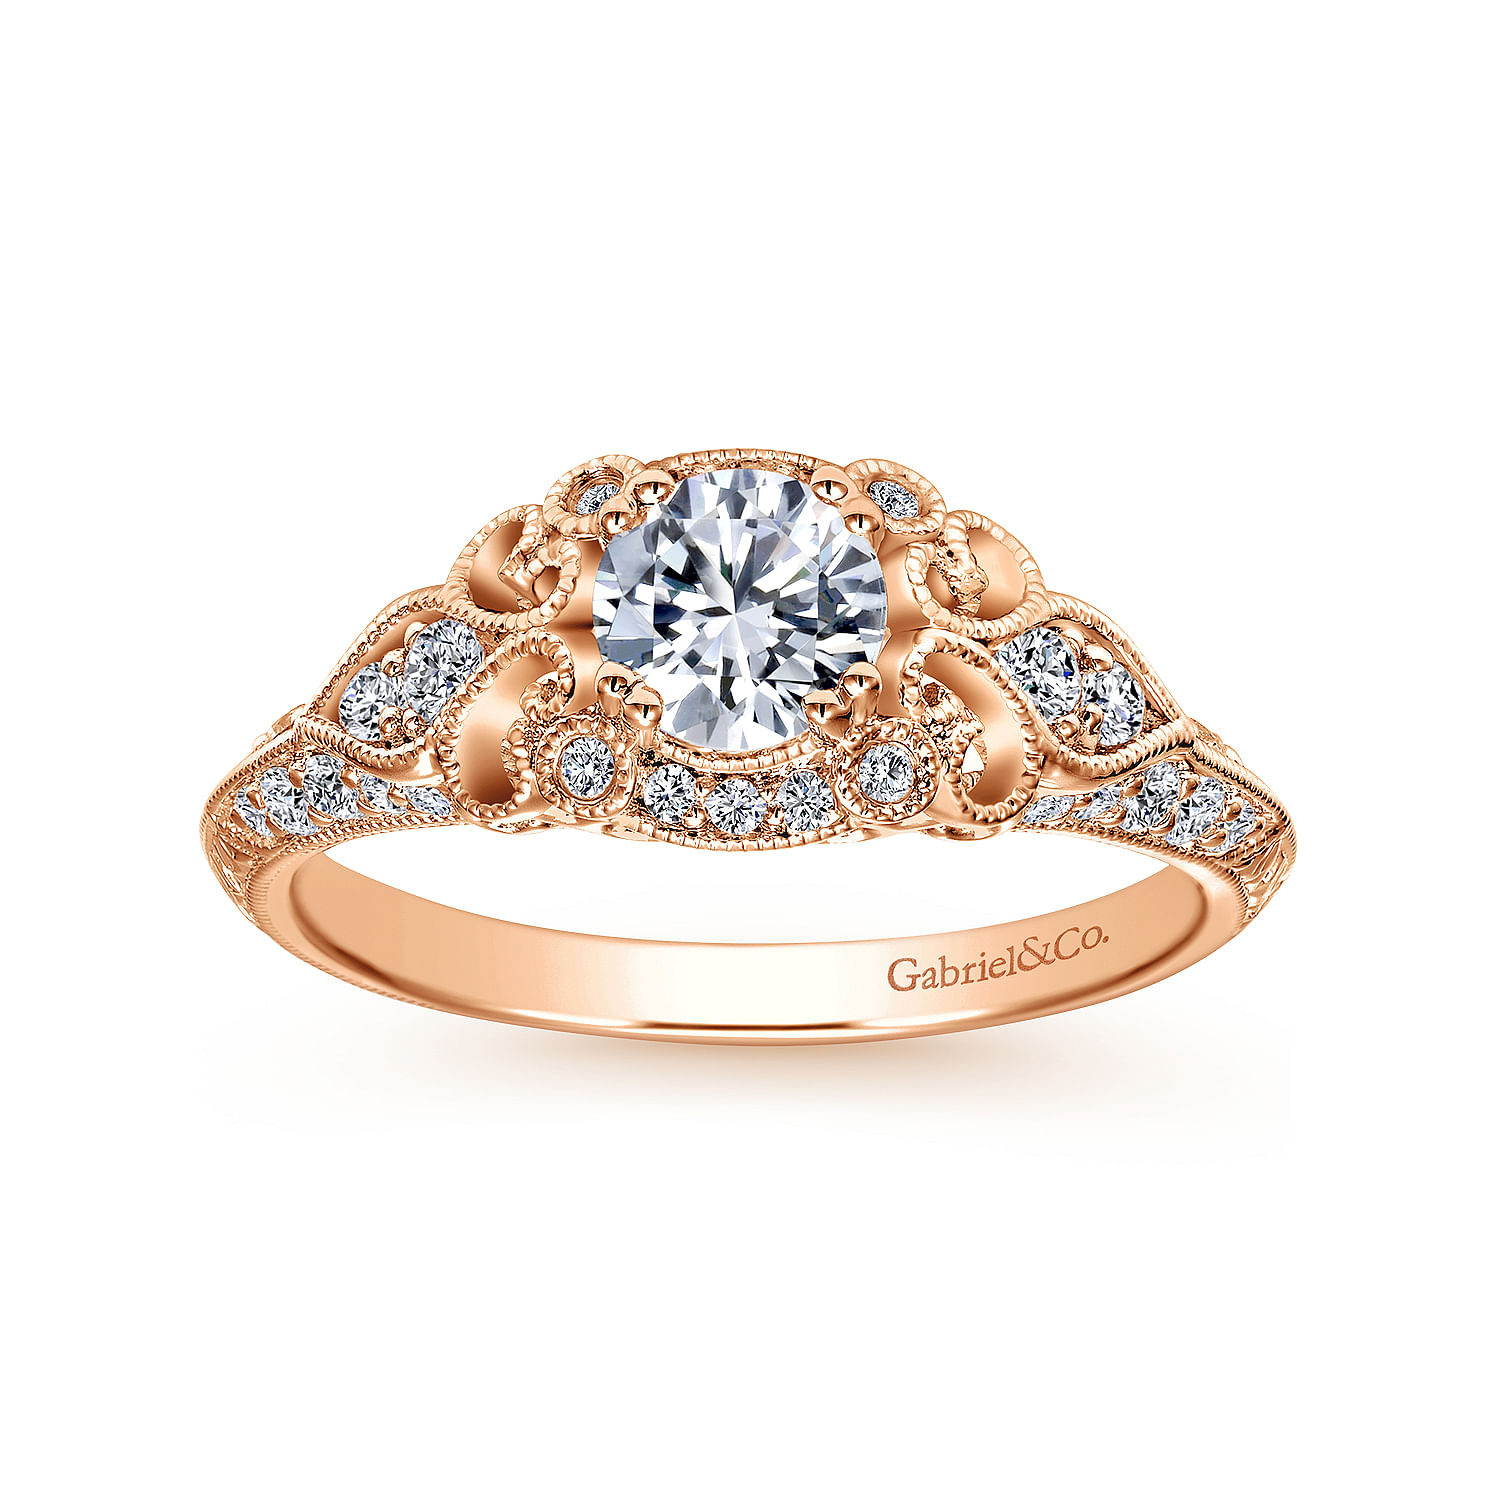 Unique 14K Rose Gold Vintage Inspired Diamond Halo Engagement Ring